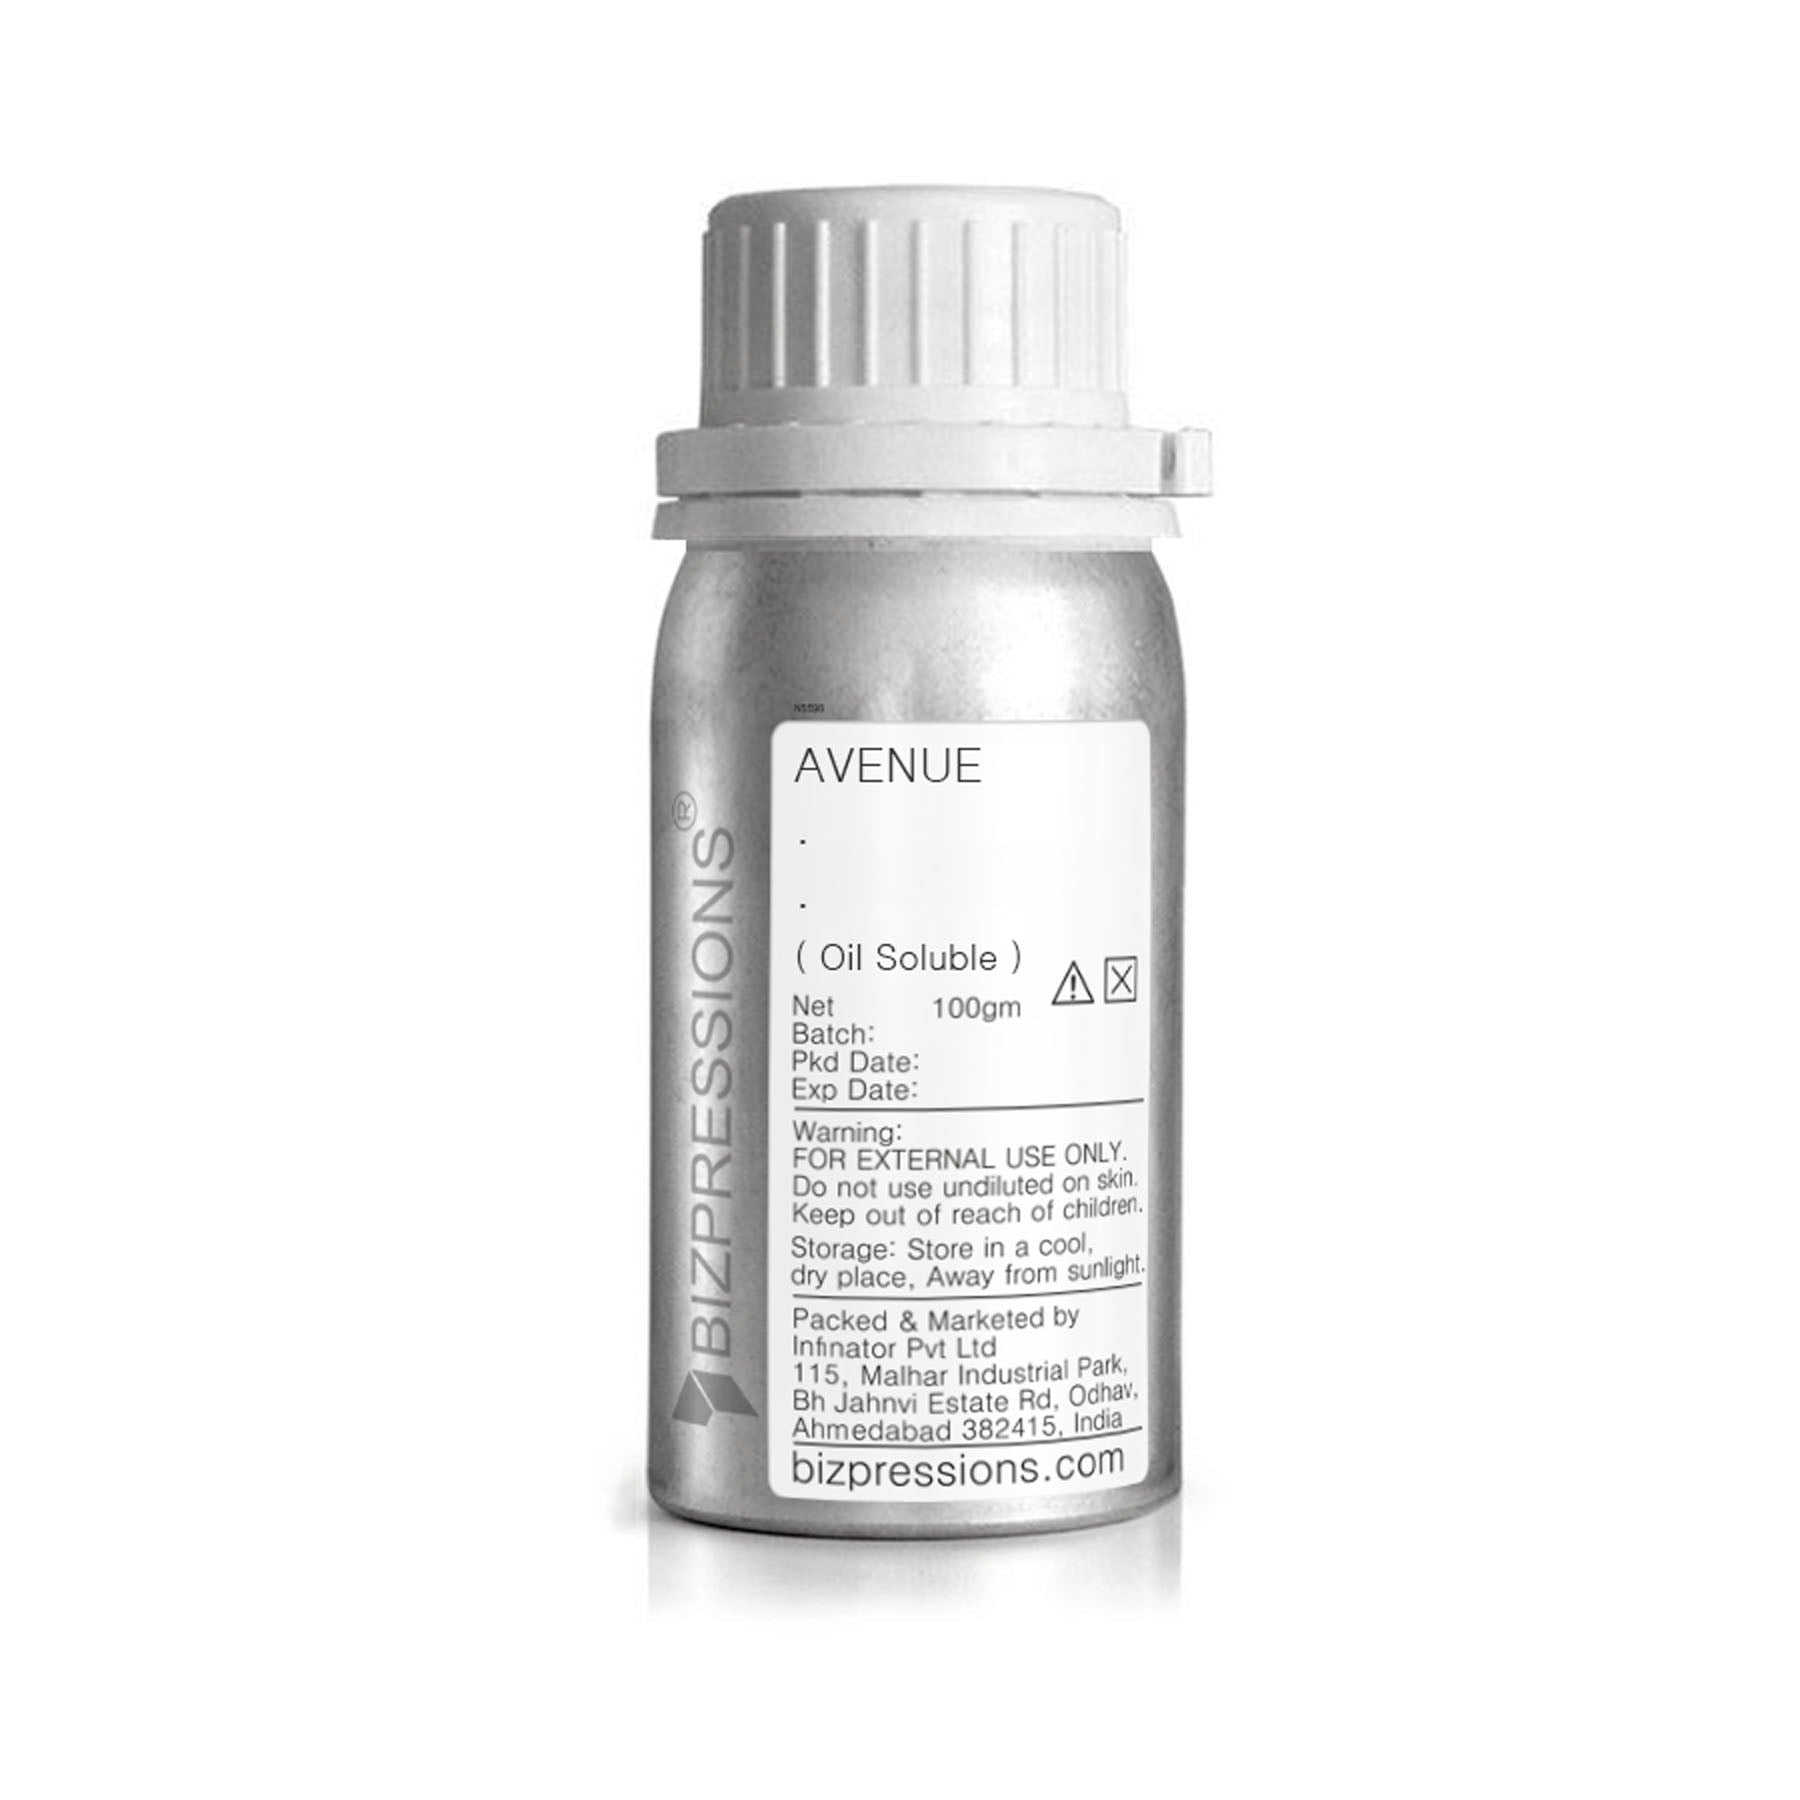 AVENUE - Fragrance ( Oil Soluble ) - 100 gm